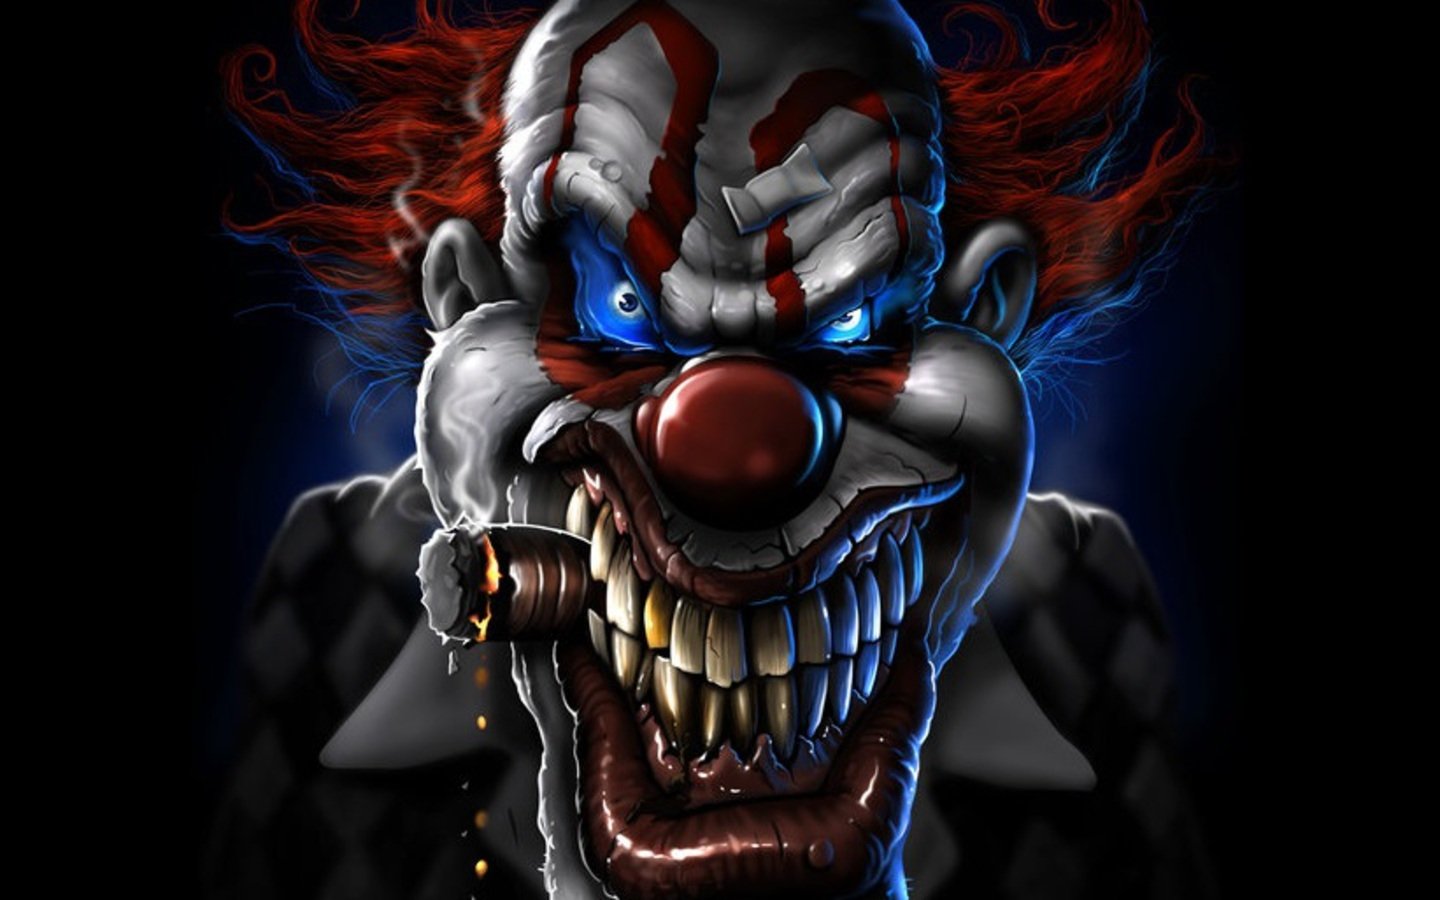 Killer clown wallpaper